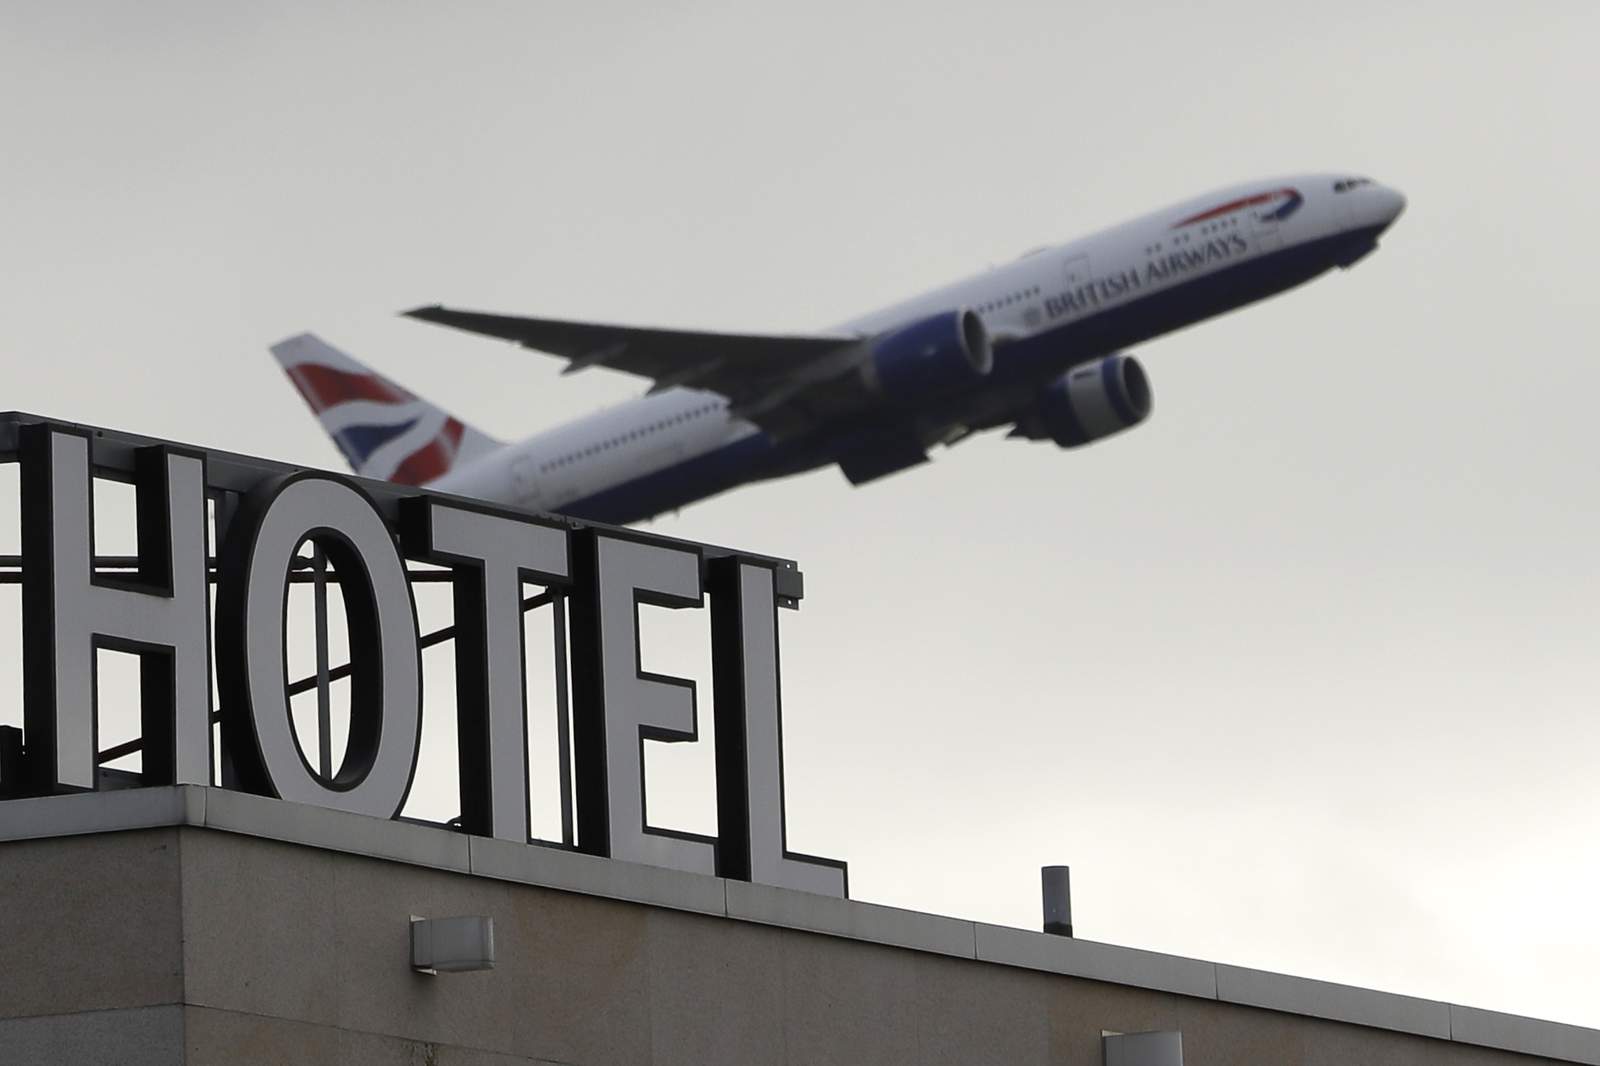 UK to start hotel quarantine Feb. 15 amid criticism of delay